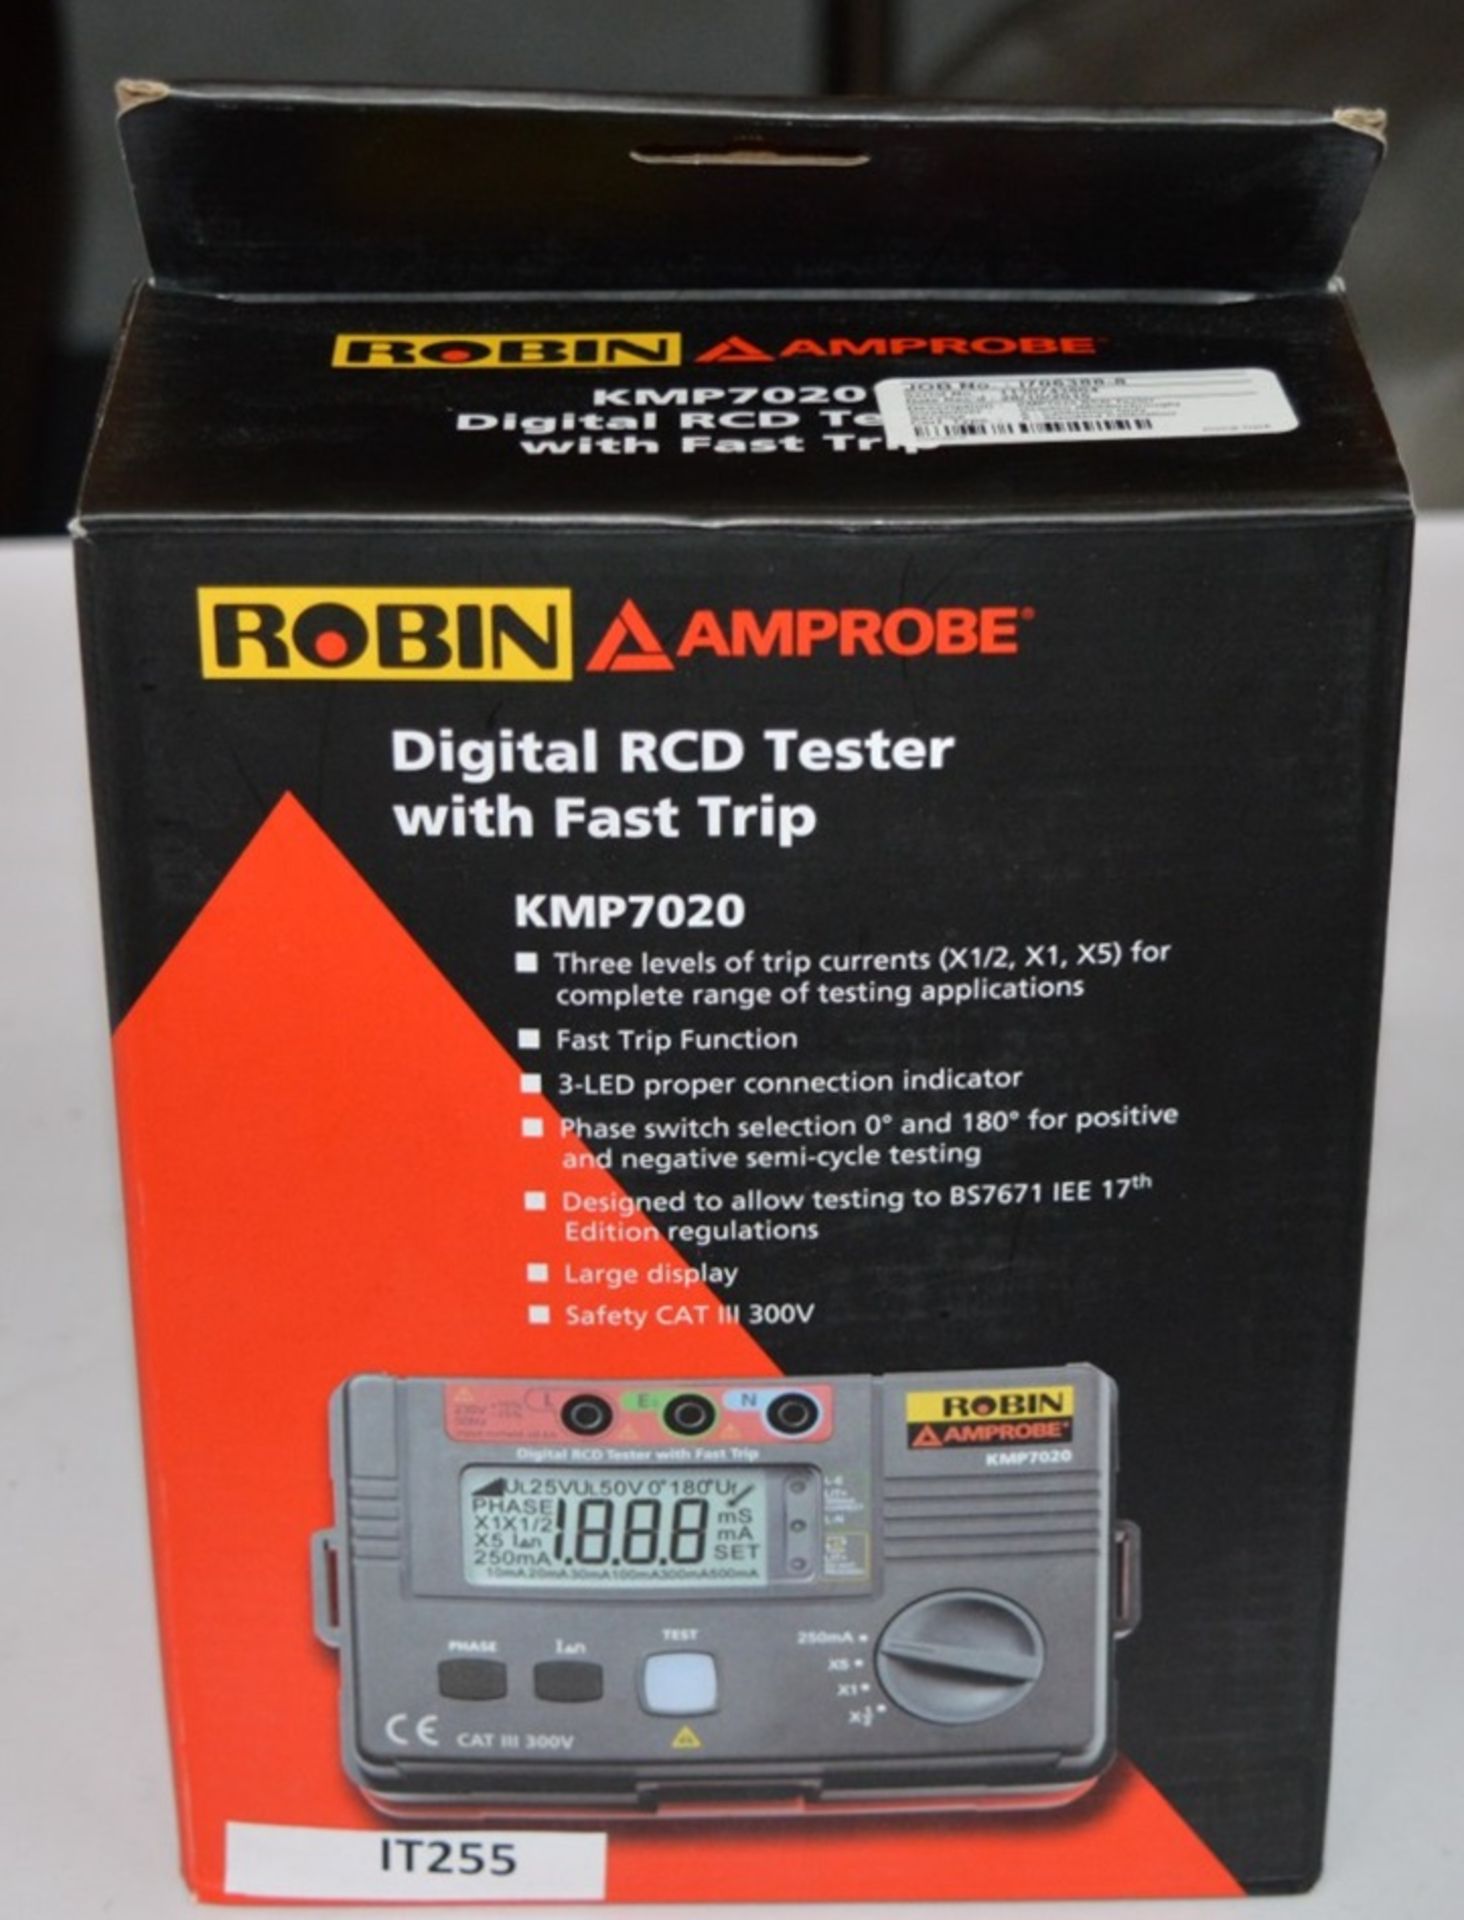 1 x Robin Amprobe Digital RCD Tester Wth Fast Trip - Model KMP7020 - Boxed With All Accessories -